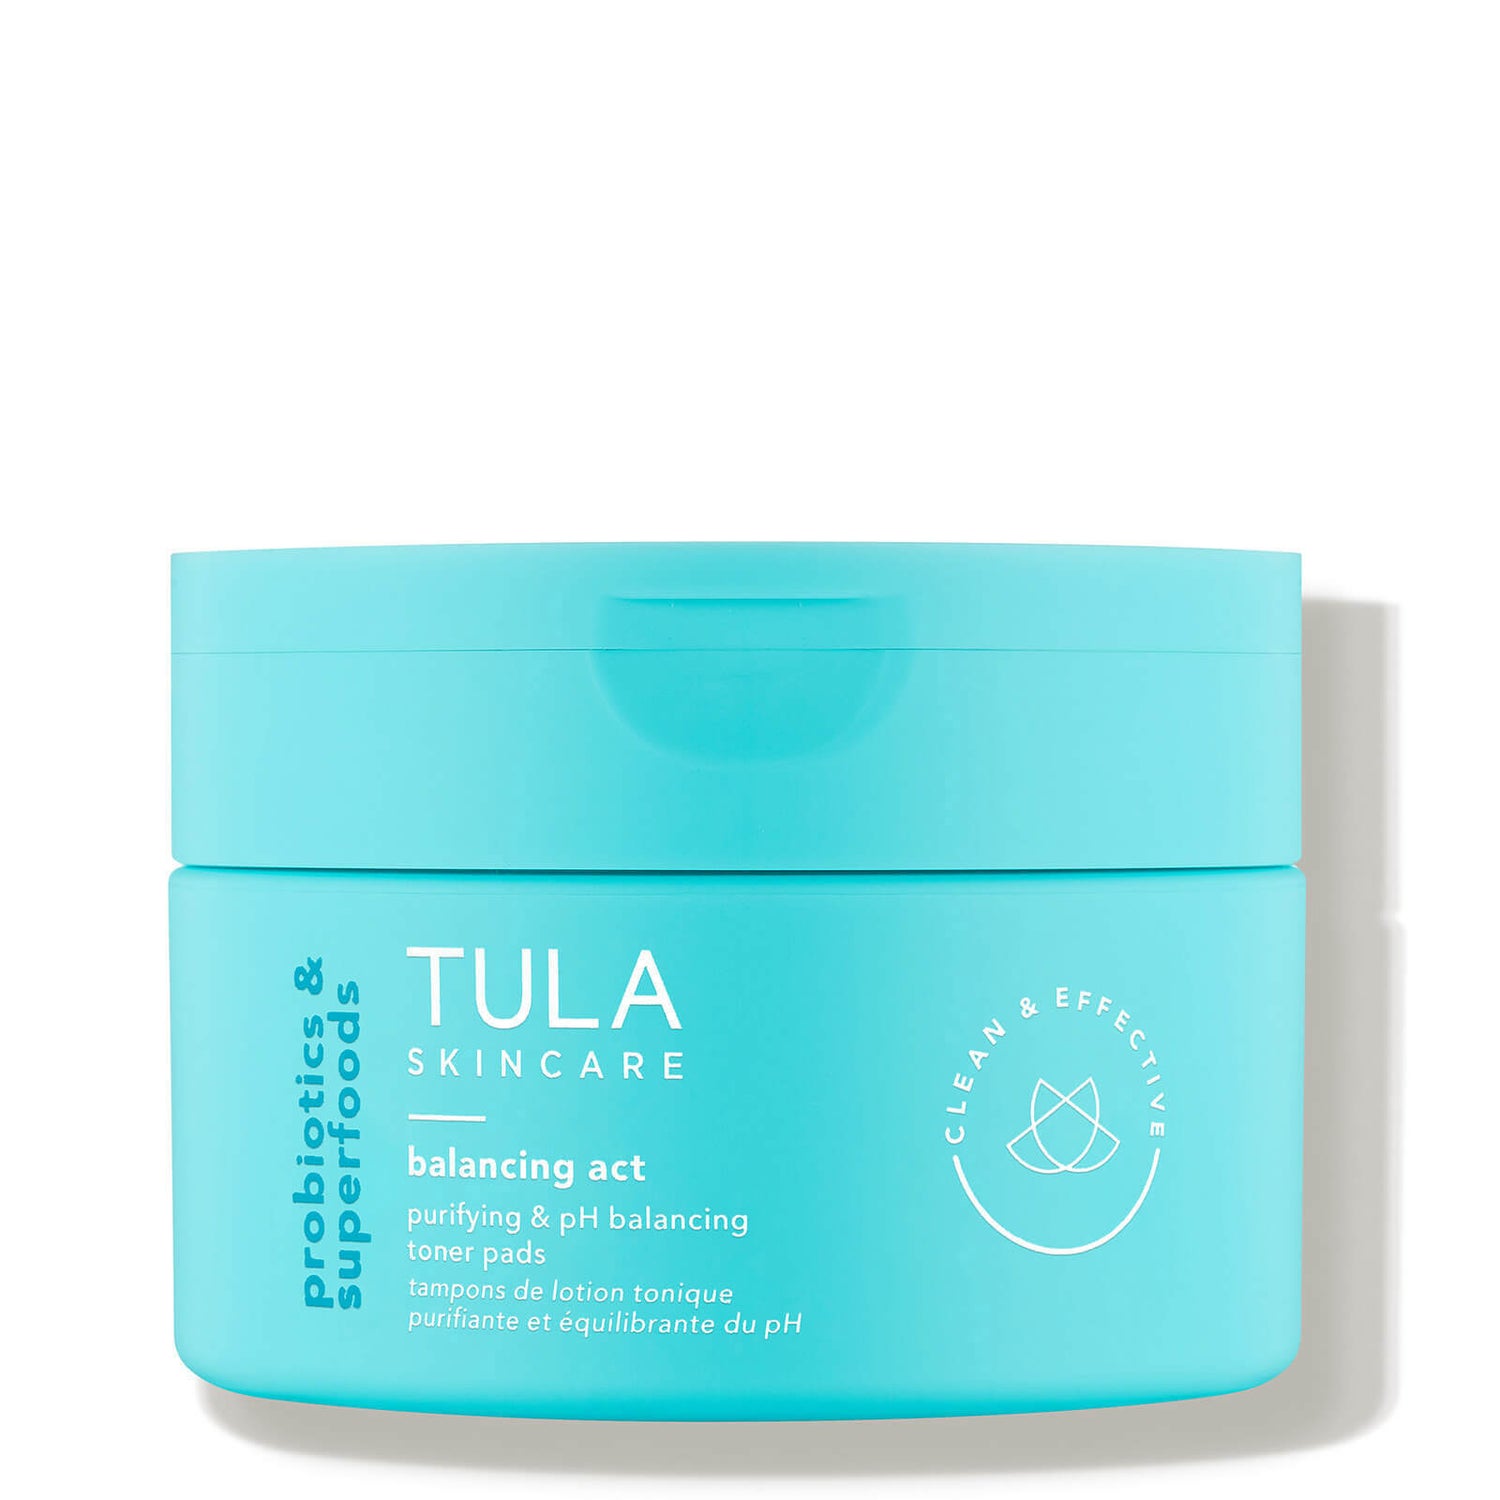 TULA Skincare Balancing Act Purifying pH Balancing Toner Pads 60 count